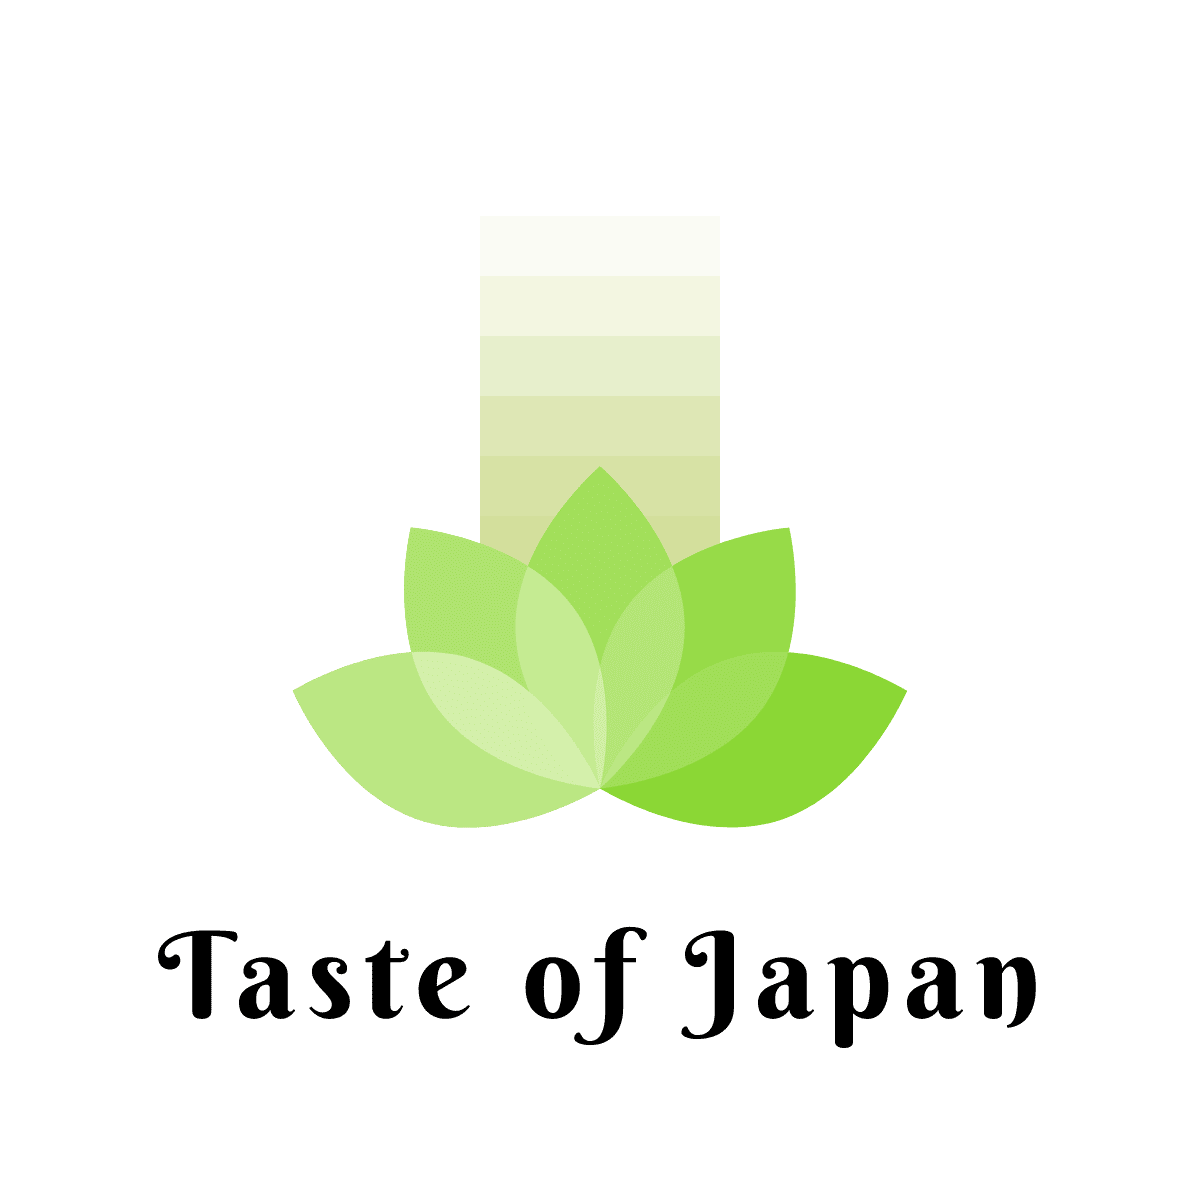 Get a taste of Japan